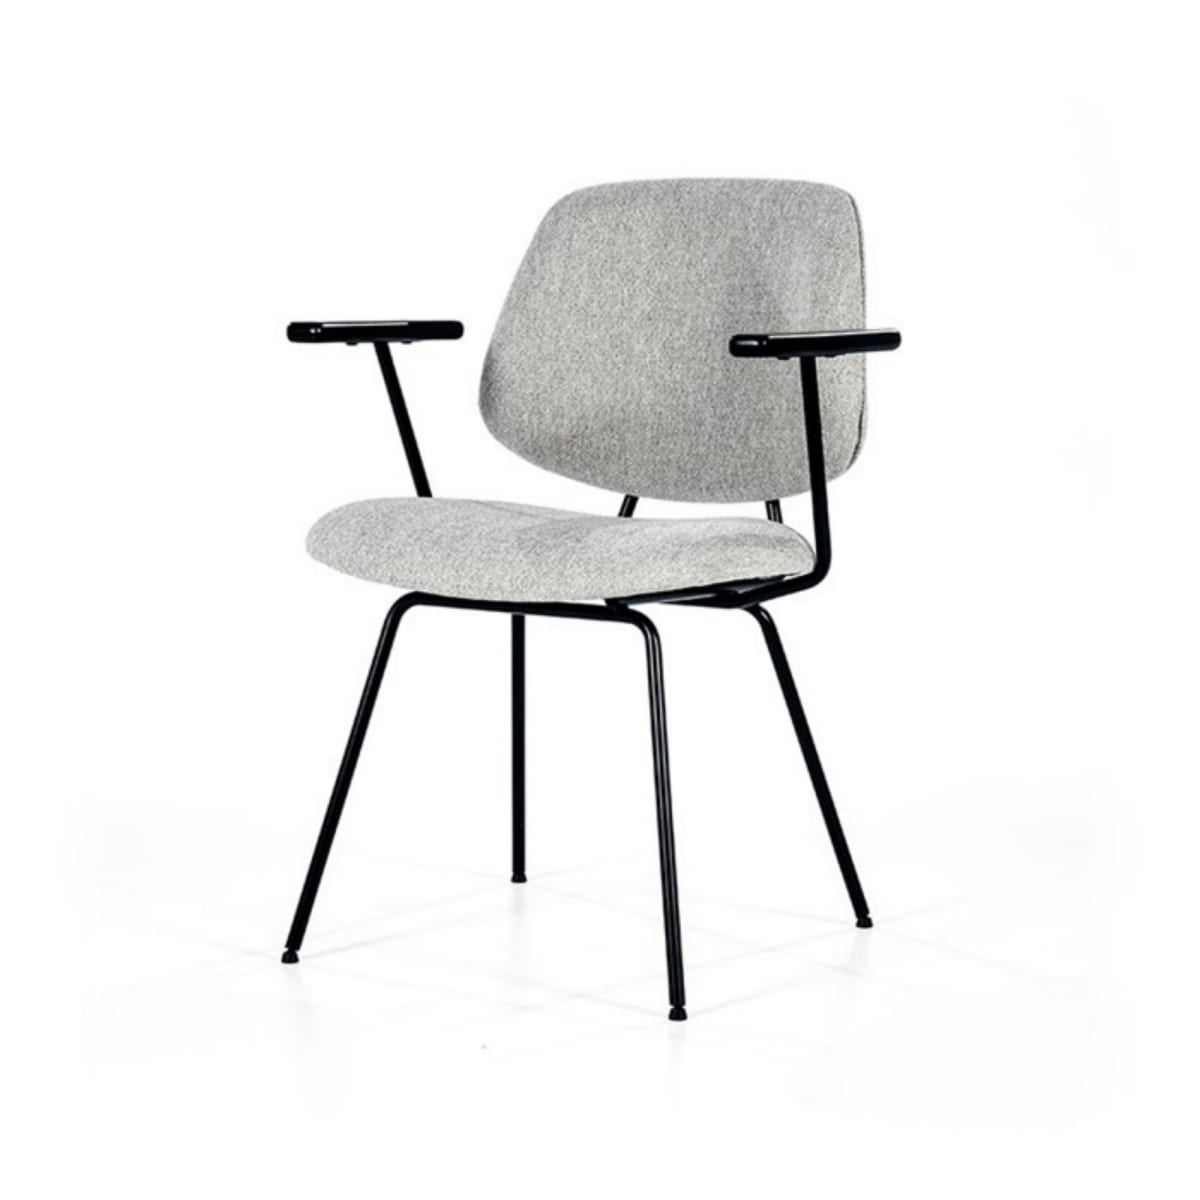 Chaise moderne avec accoudoirs en tissu gris